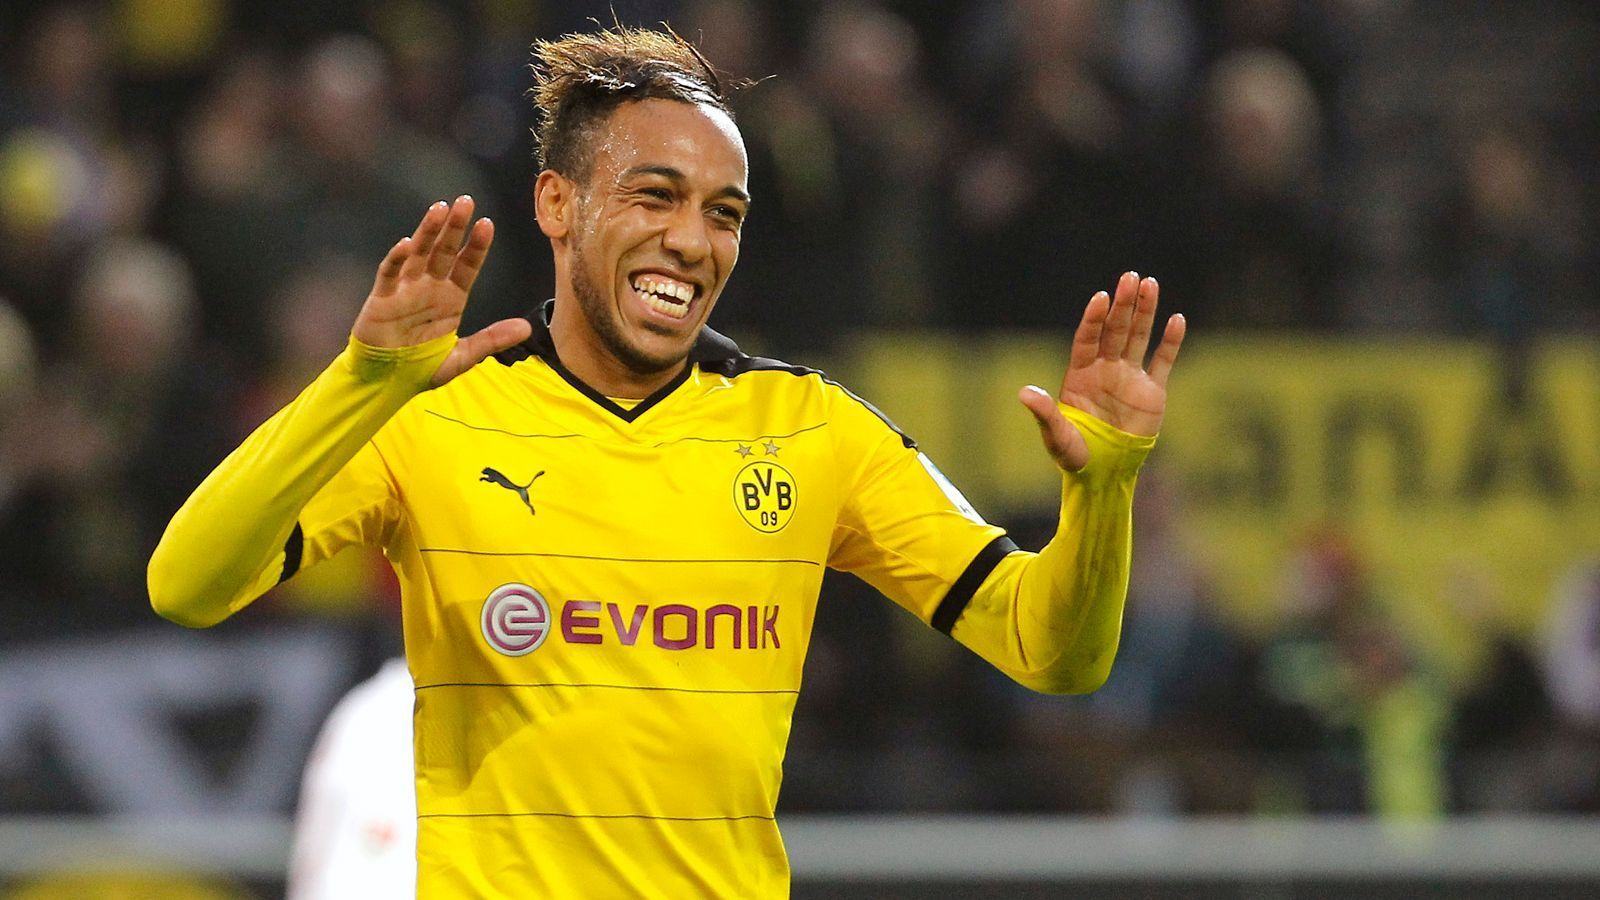 
                <strong>Pierre-Emerick Aubameyang (Borussia Dortmund)</strong><br>
                Traf in acht Spielen in Folge nach dem Saisonbeginn 2015/16
              